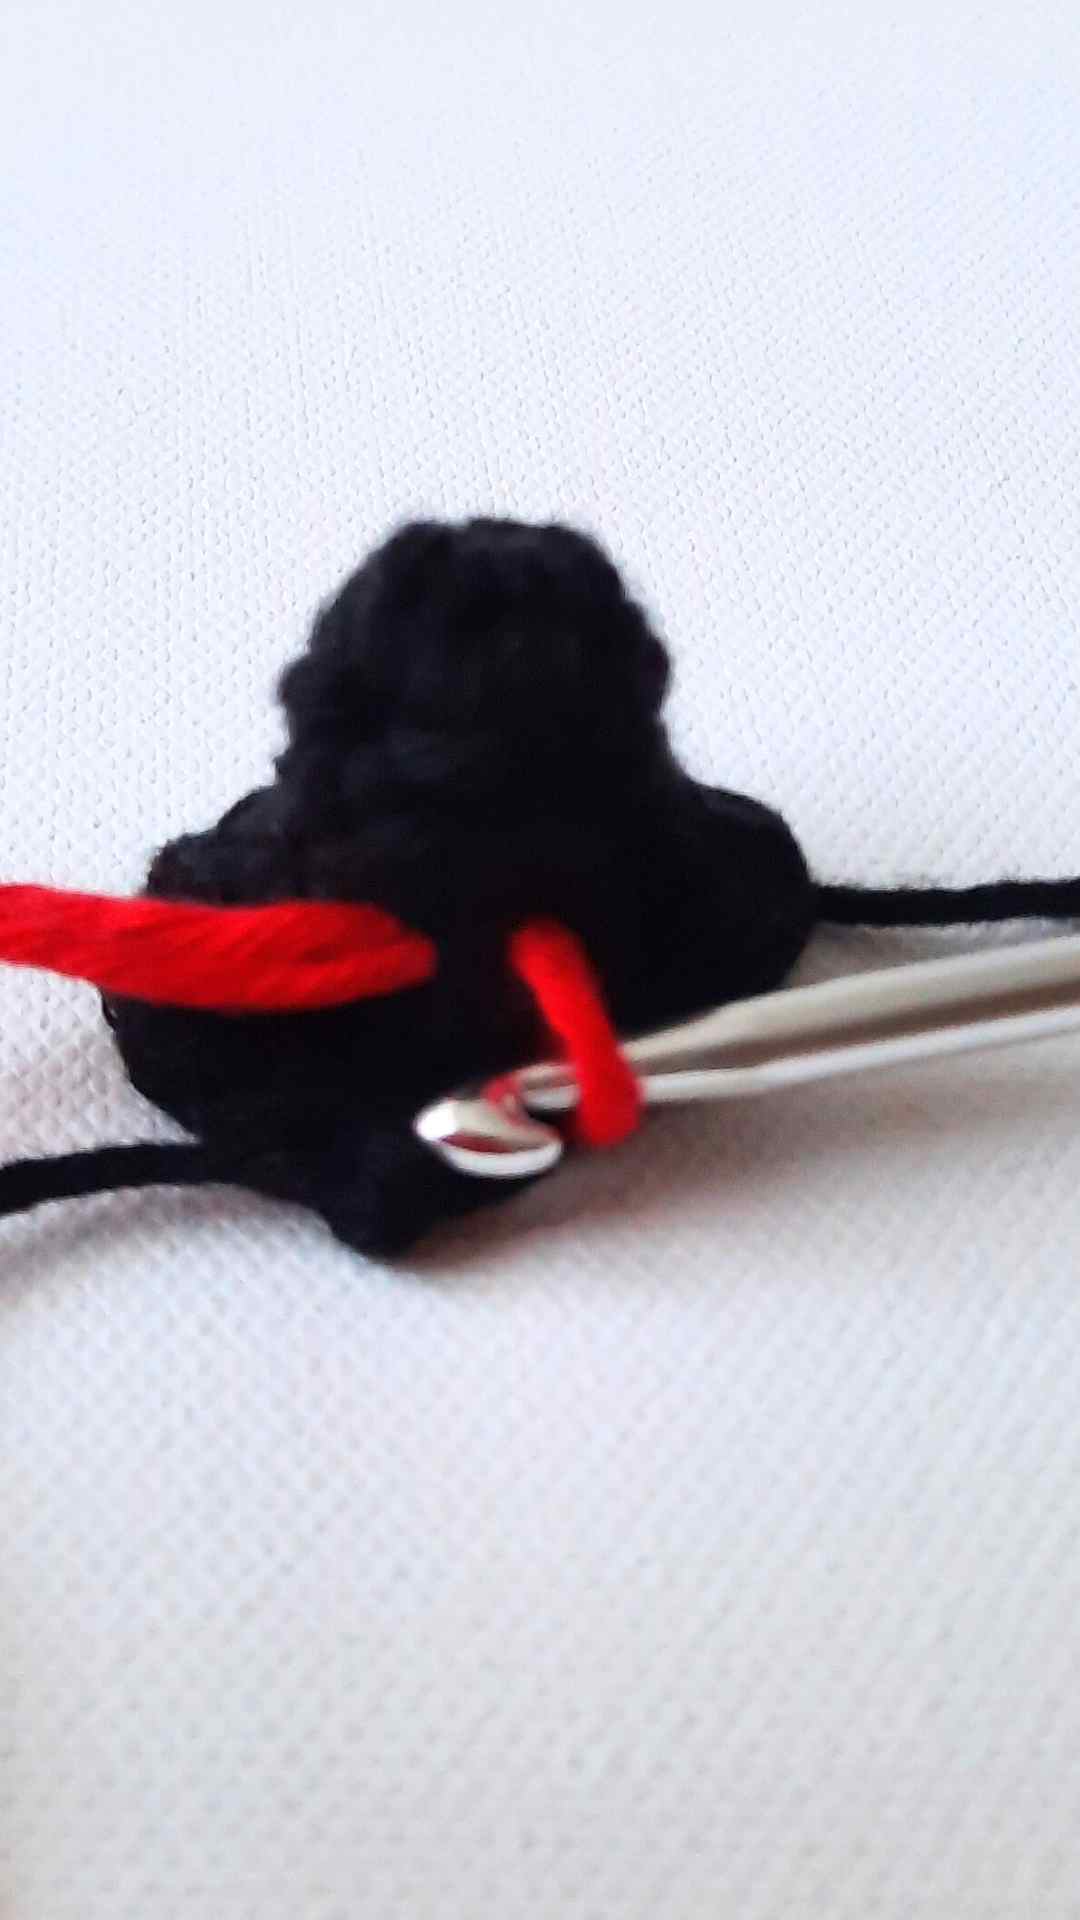 Christmas crochet project ideas